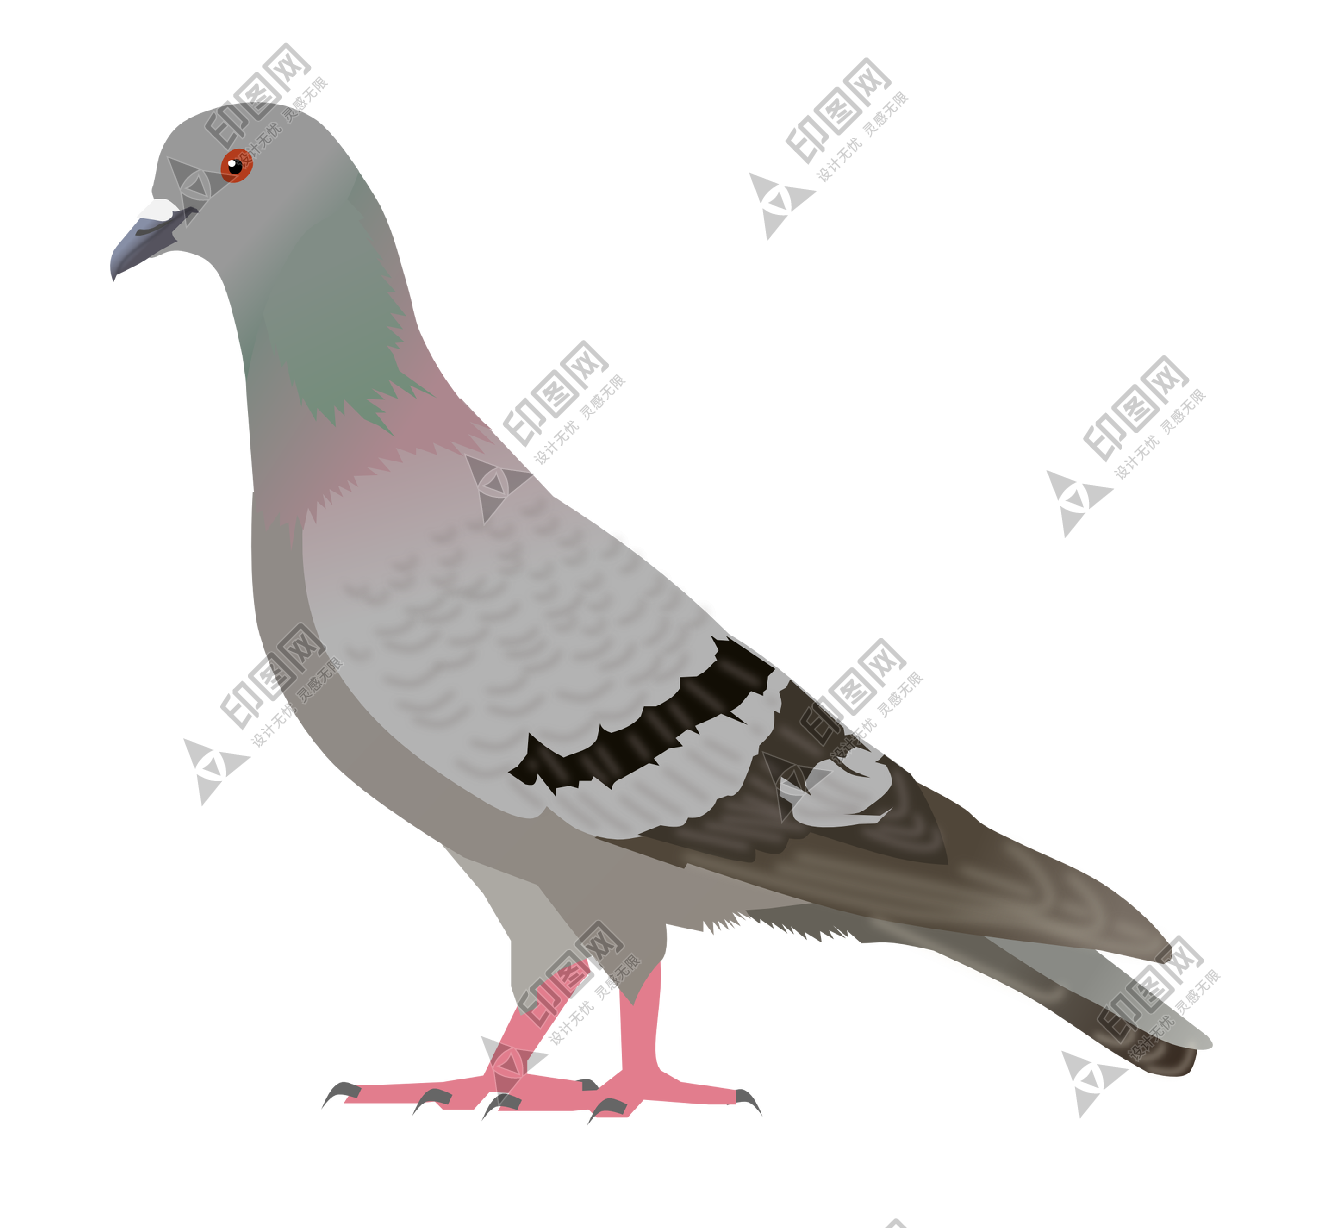 鸟_鸽子_鹁鸽_pigeon_pigeon